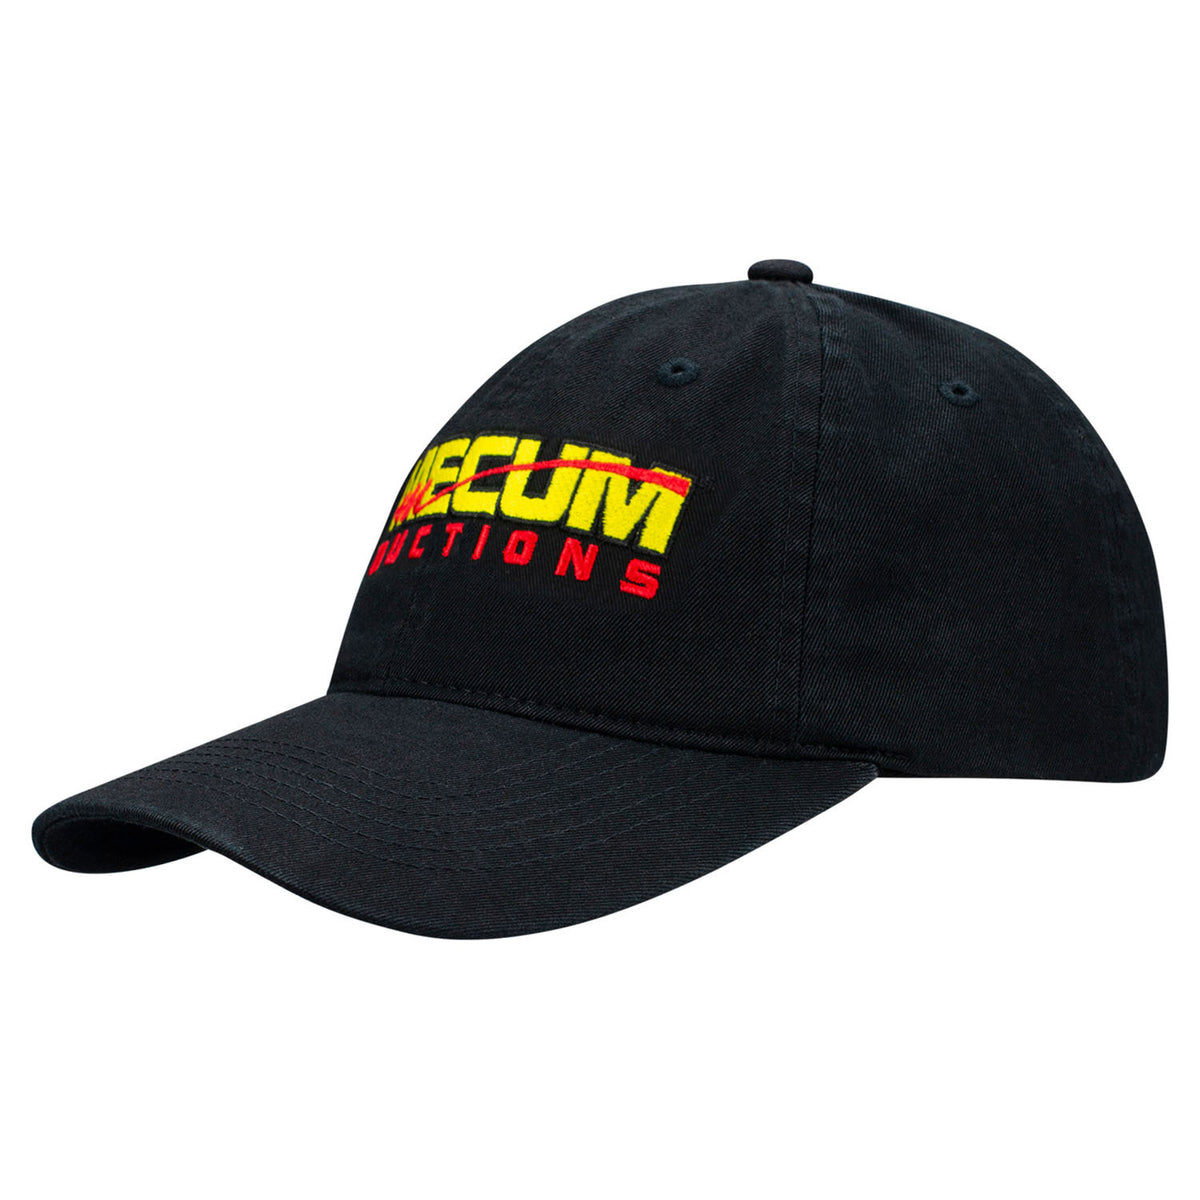 Mecum Black Dad Hat Primary Logo - Front Left Side View